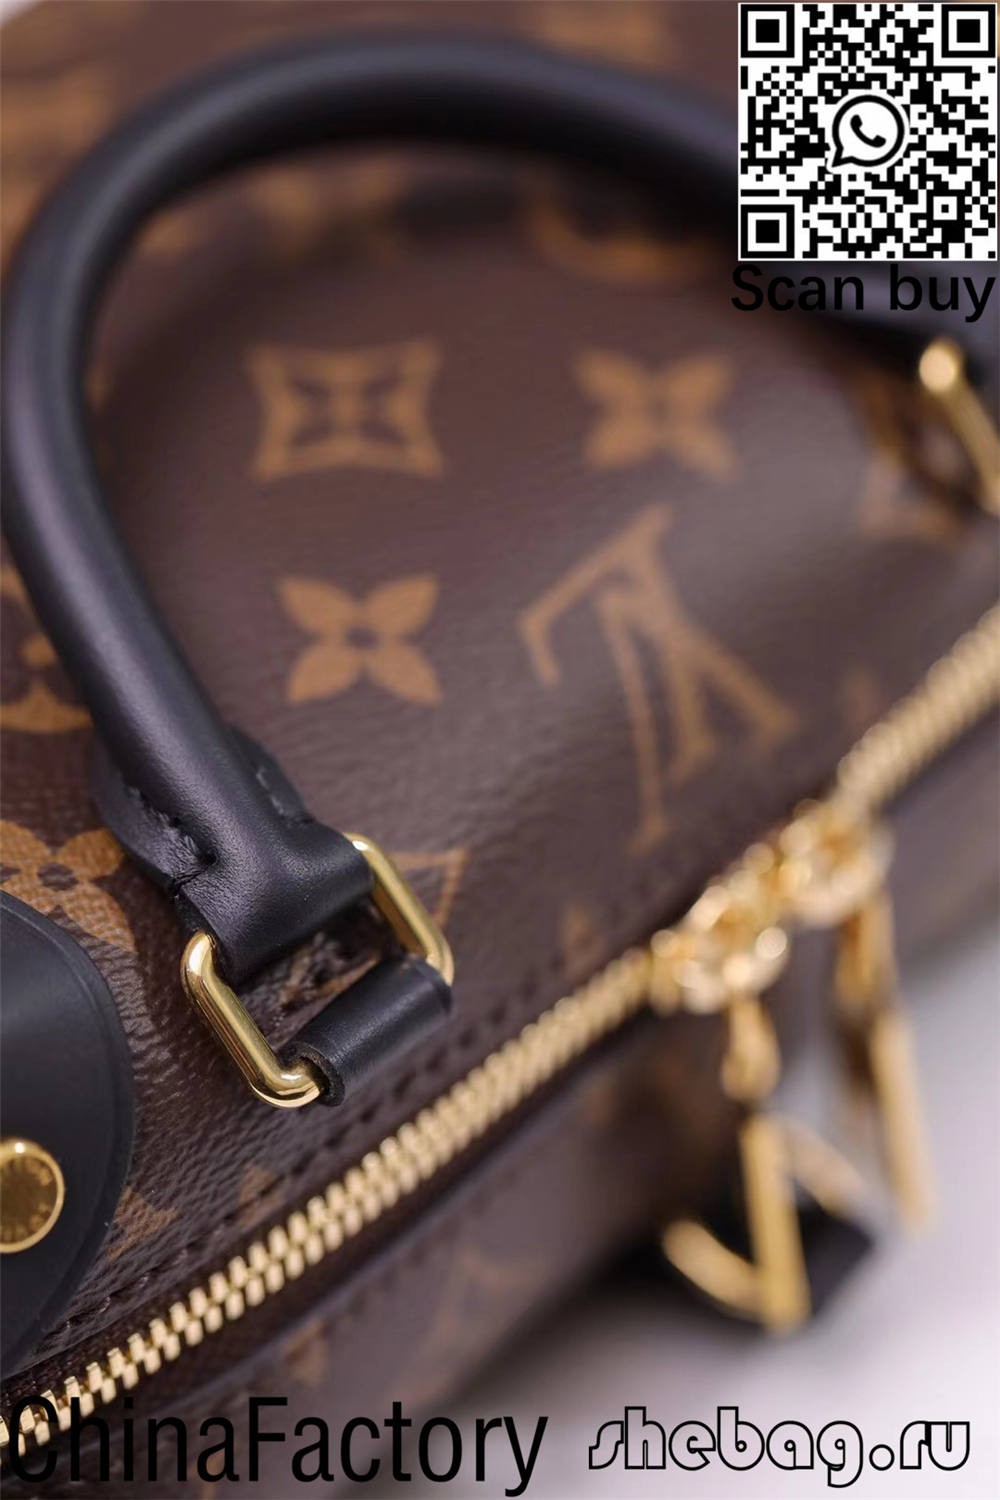 matumba a louis vitton replicas uk kugula malingaliro (2022 atsopano)-Best Quality Fake Louis Vuitton Bag Online Store, Replica designer bag ru